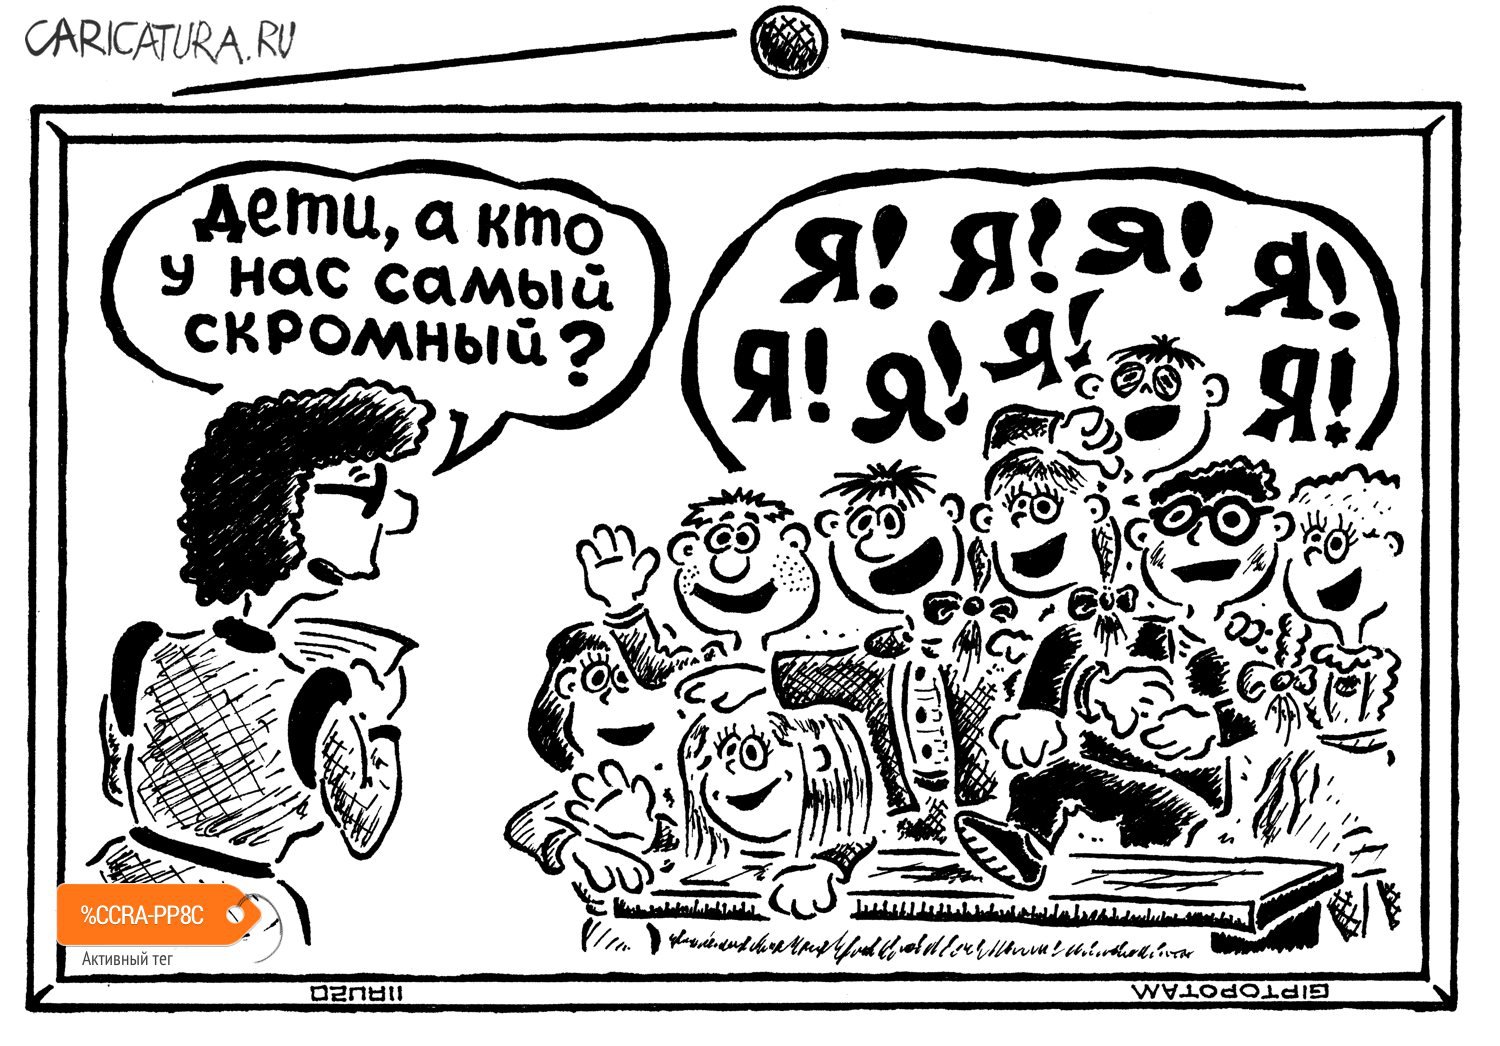 Карикатура "Самый скромный", Александр Евангелистов